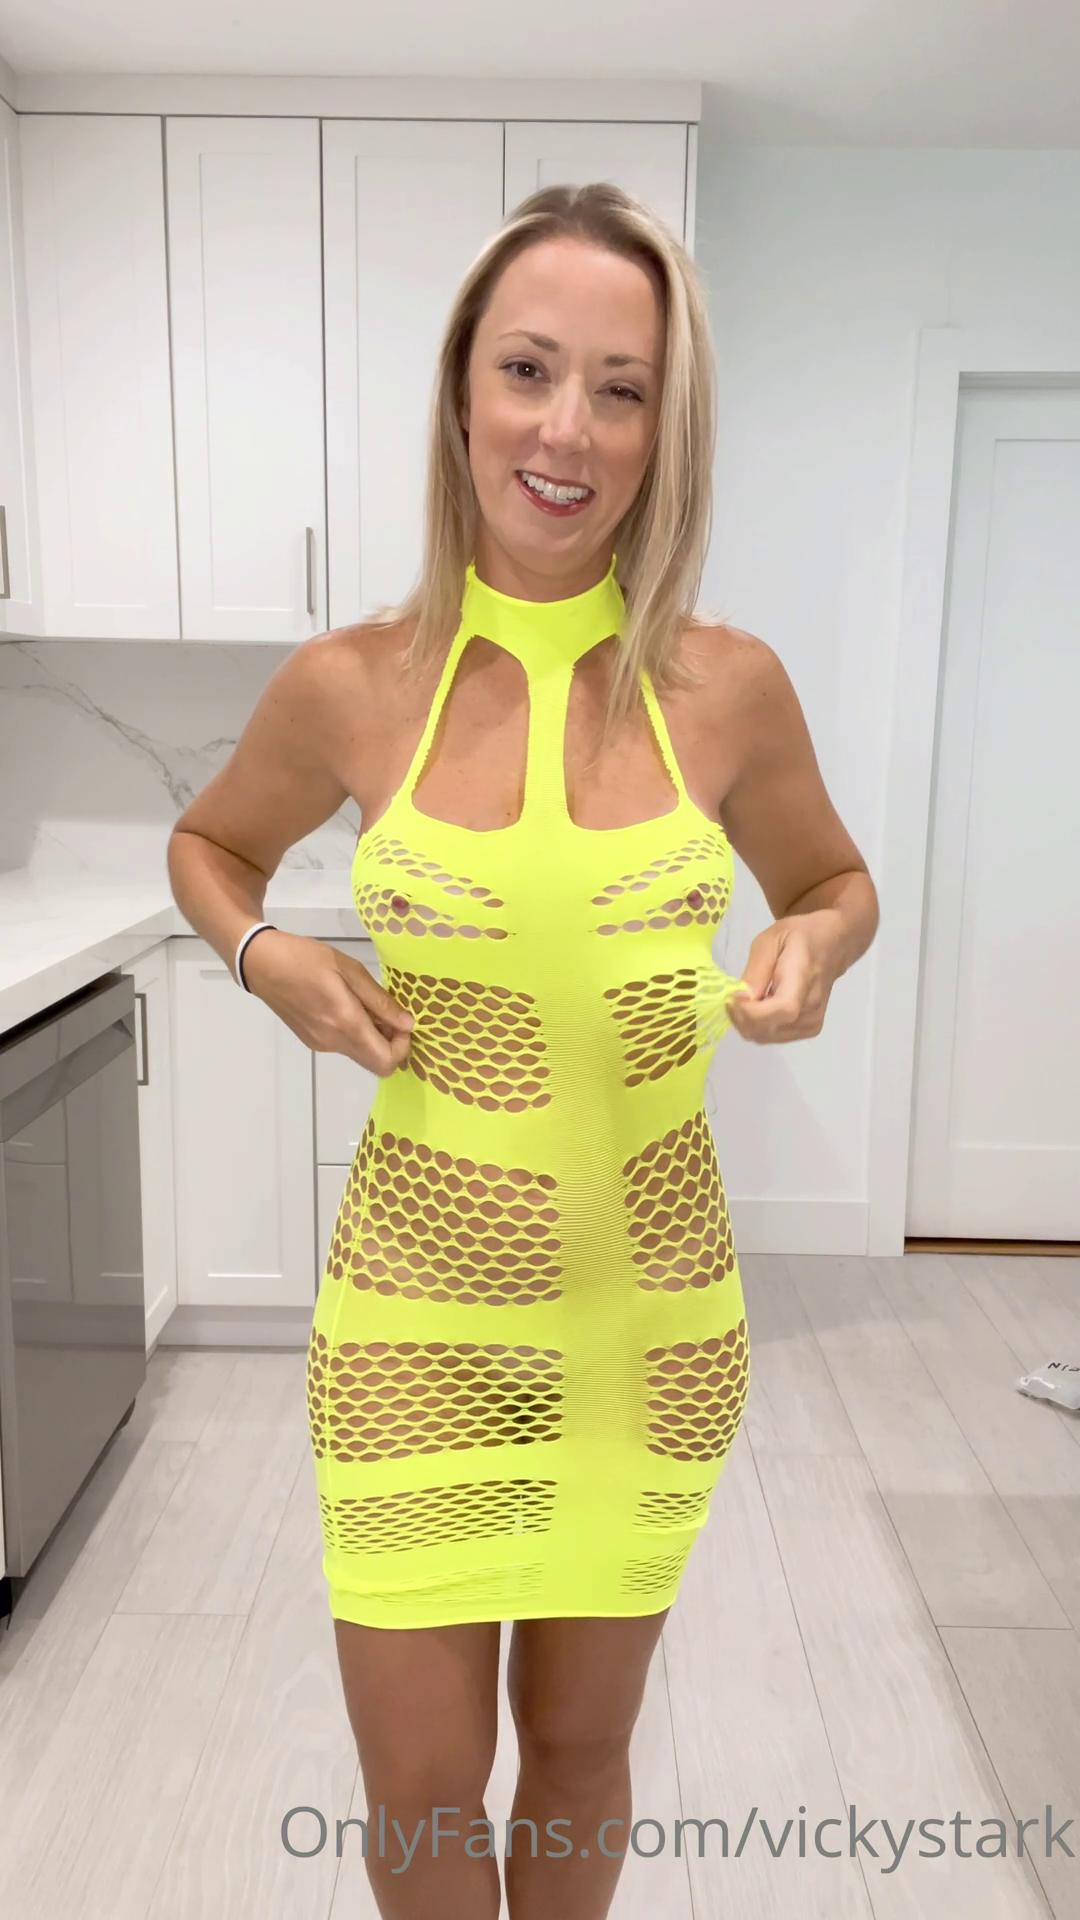 vicky stark mesh lingerie try on onlyfans video leaked WKYEXI